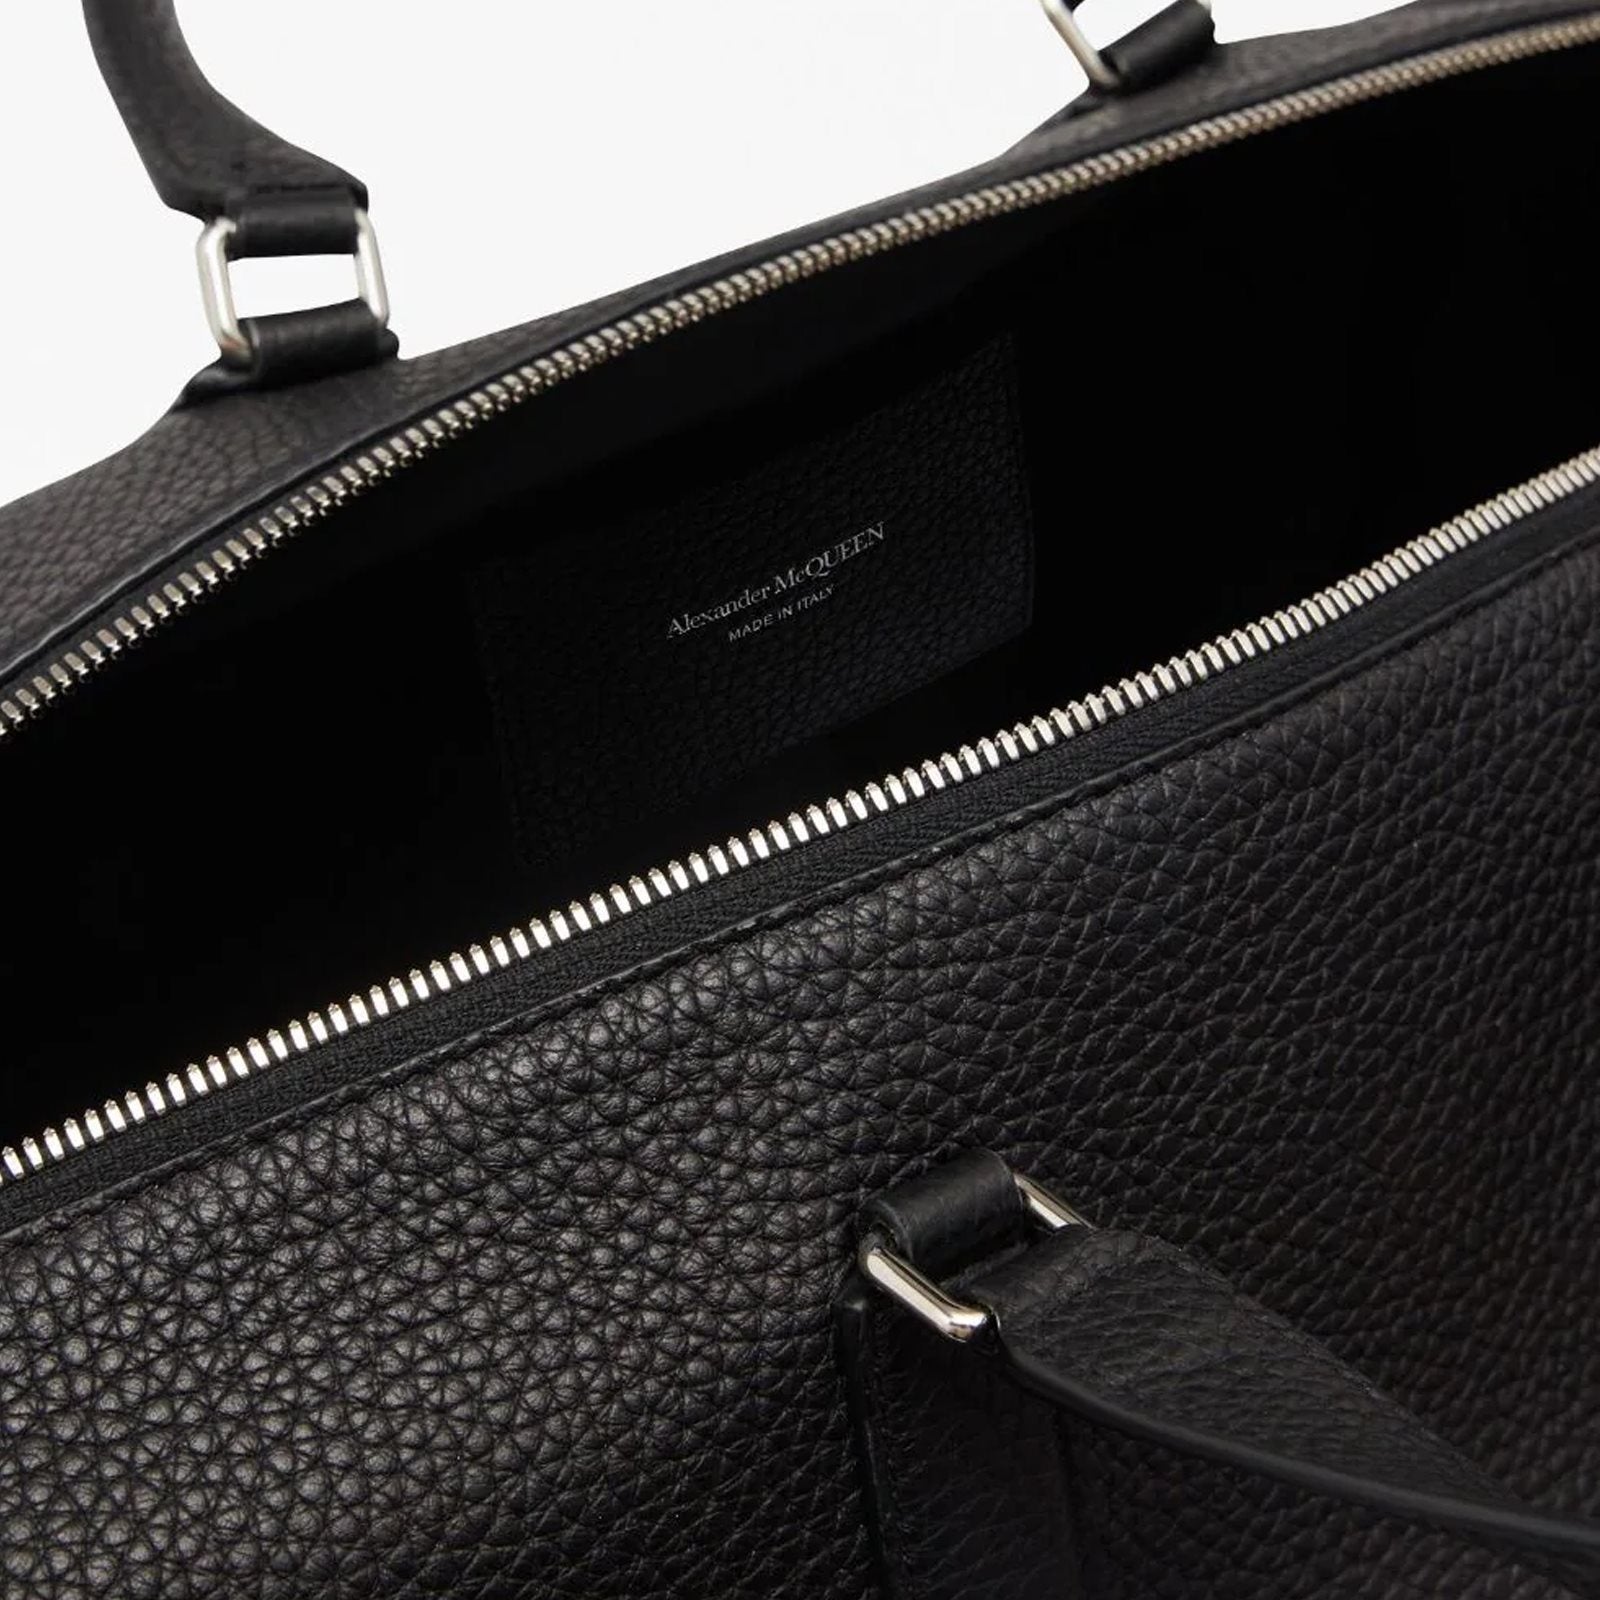 Leather edge duffle travel bag